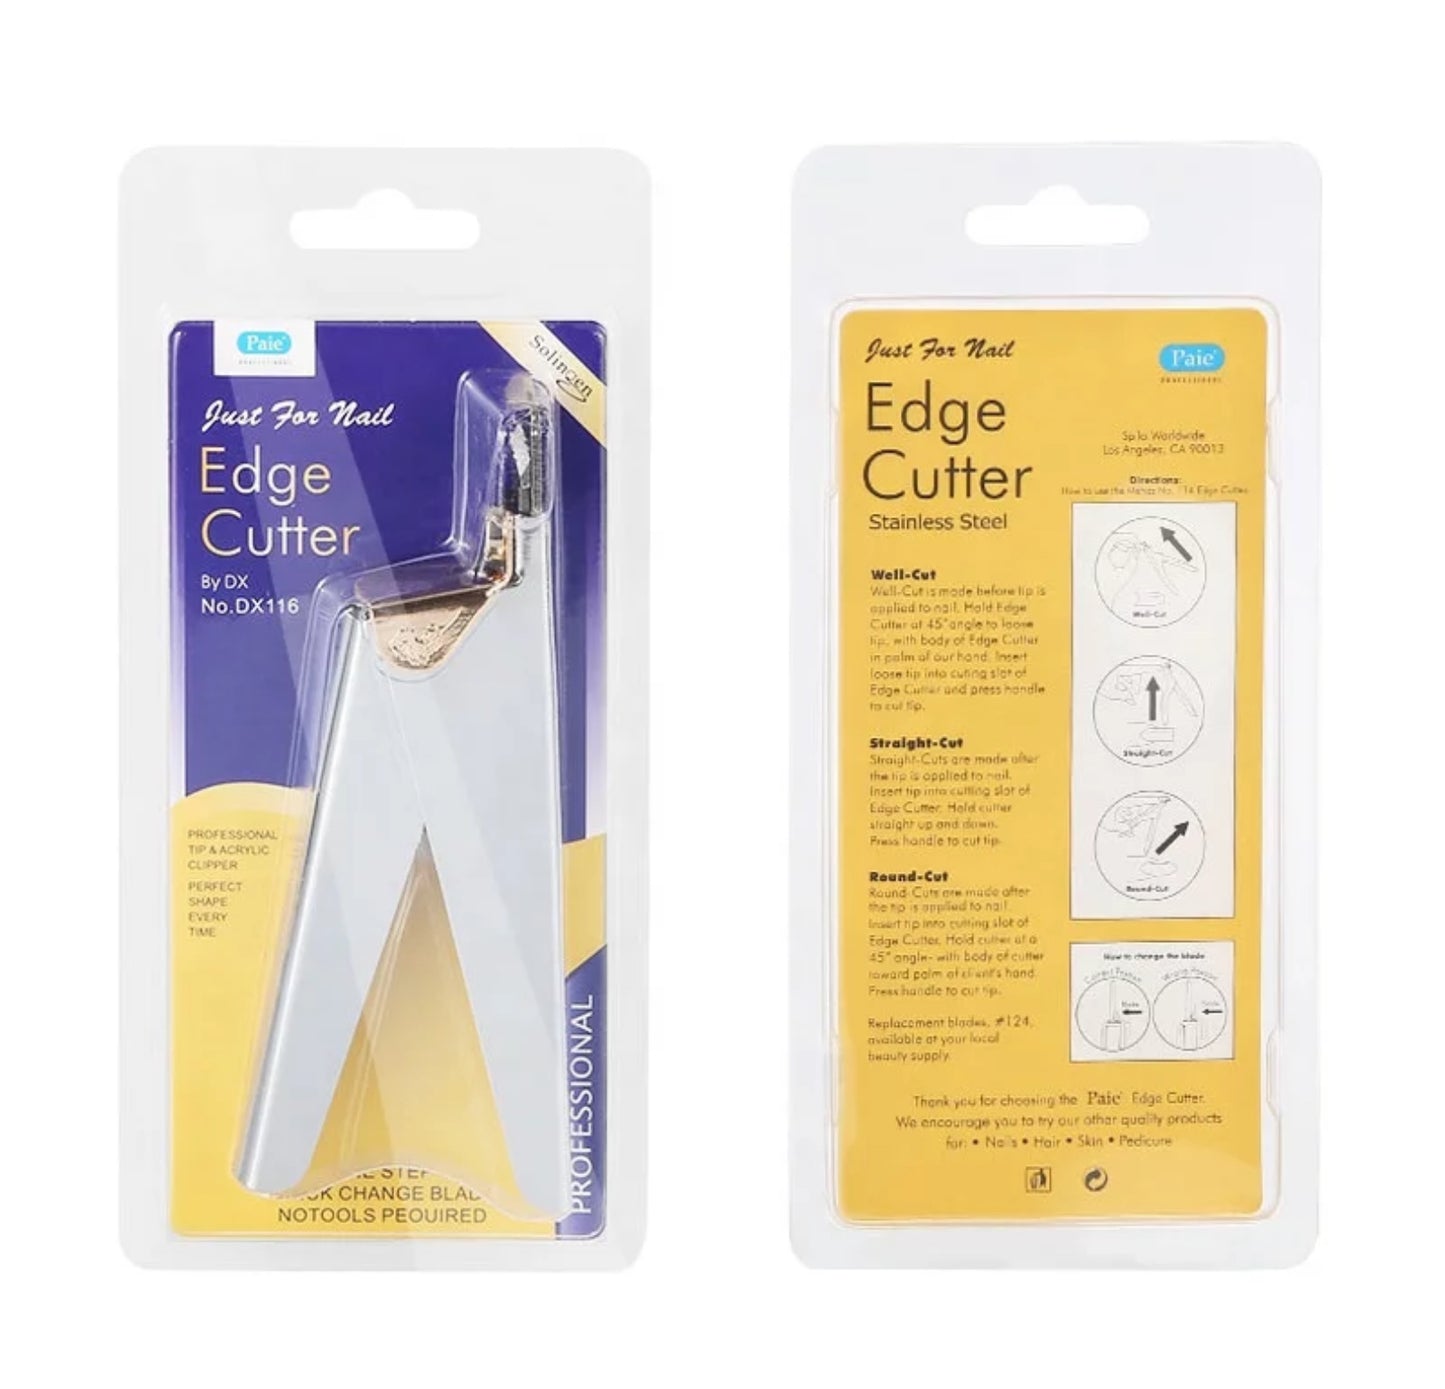 EDGE Professional Nail Cutter Silver - Premier Nail Supply 